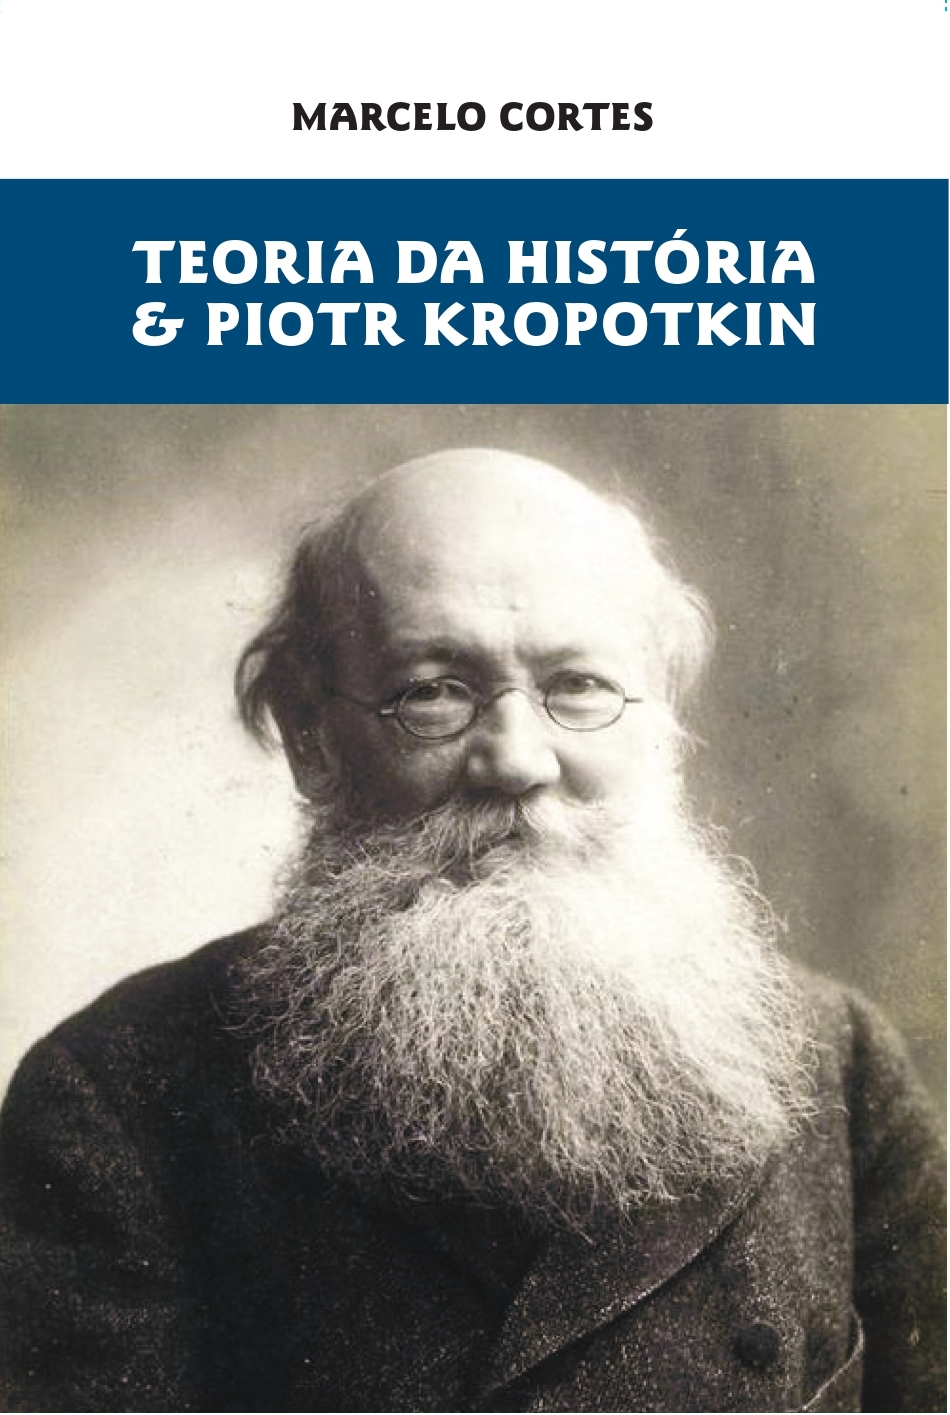 Marcelo Cortes – Teoria da História & Piotr Kropotkin